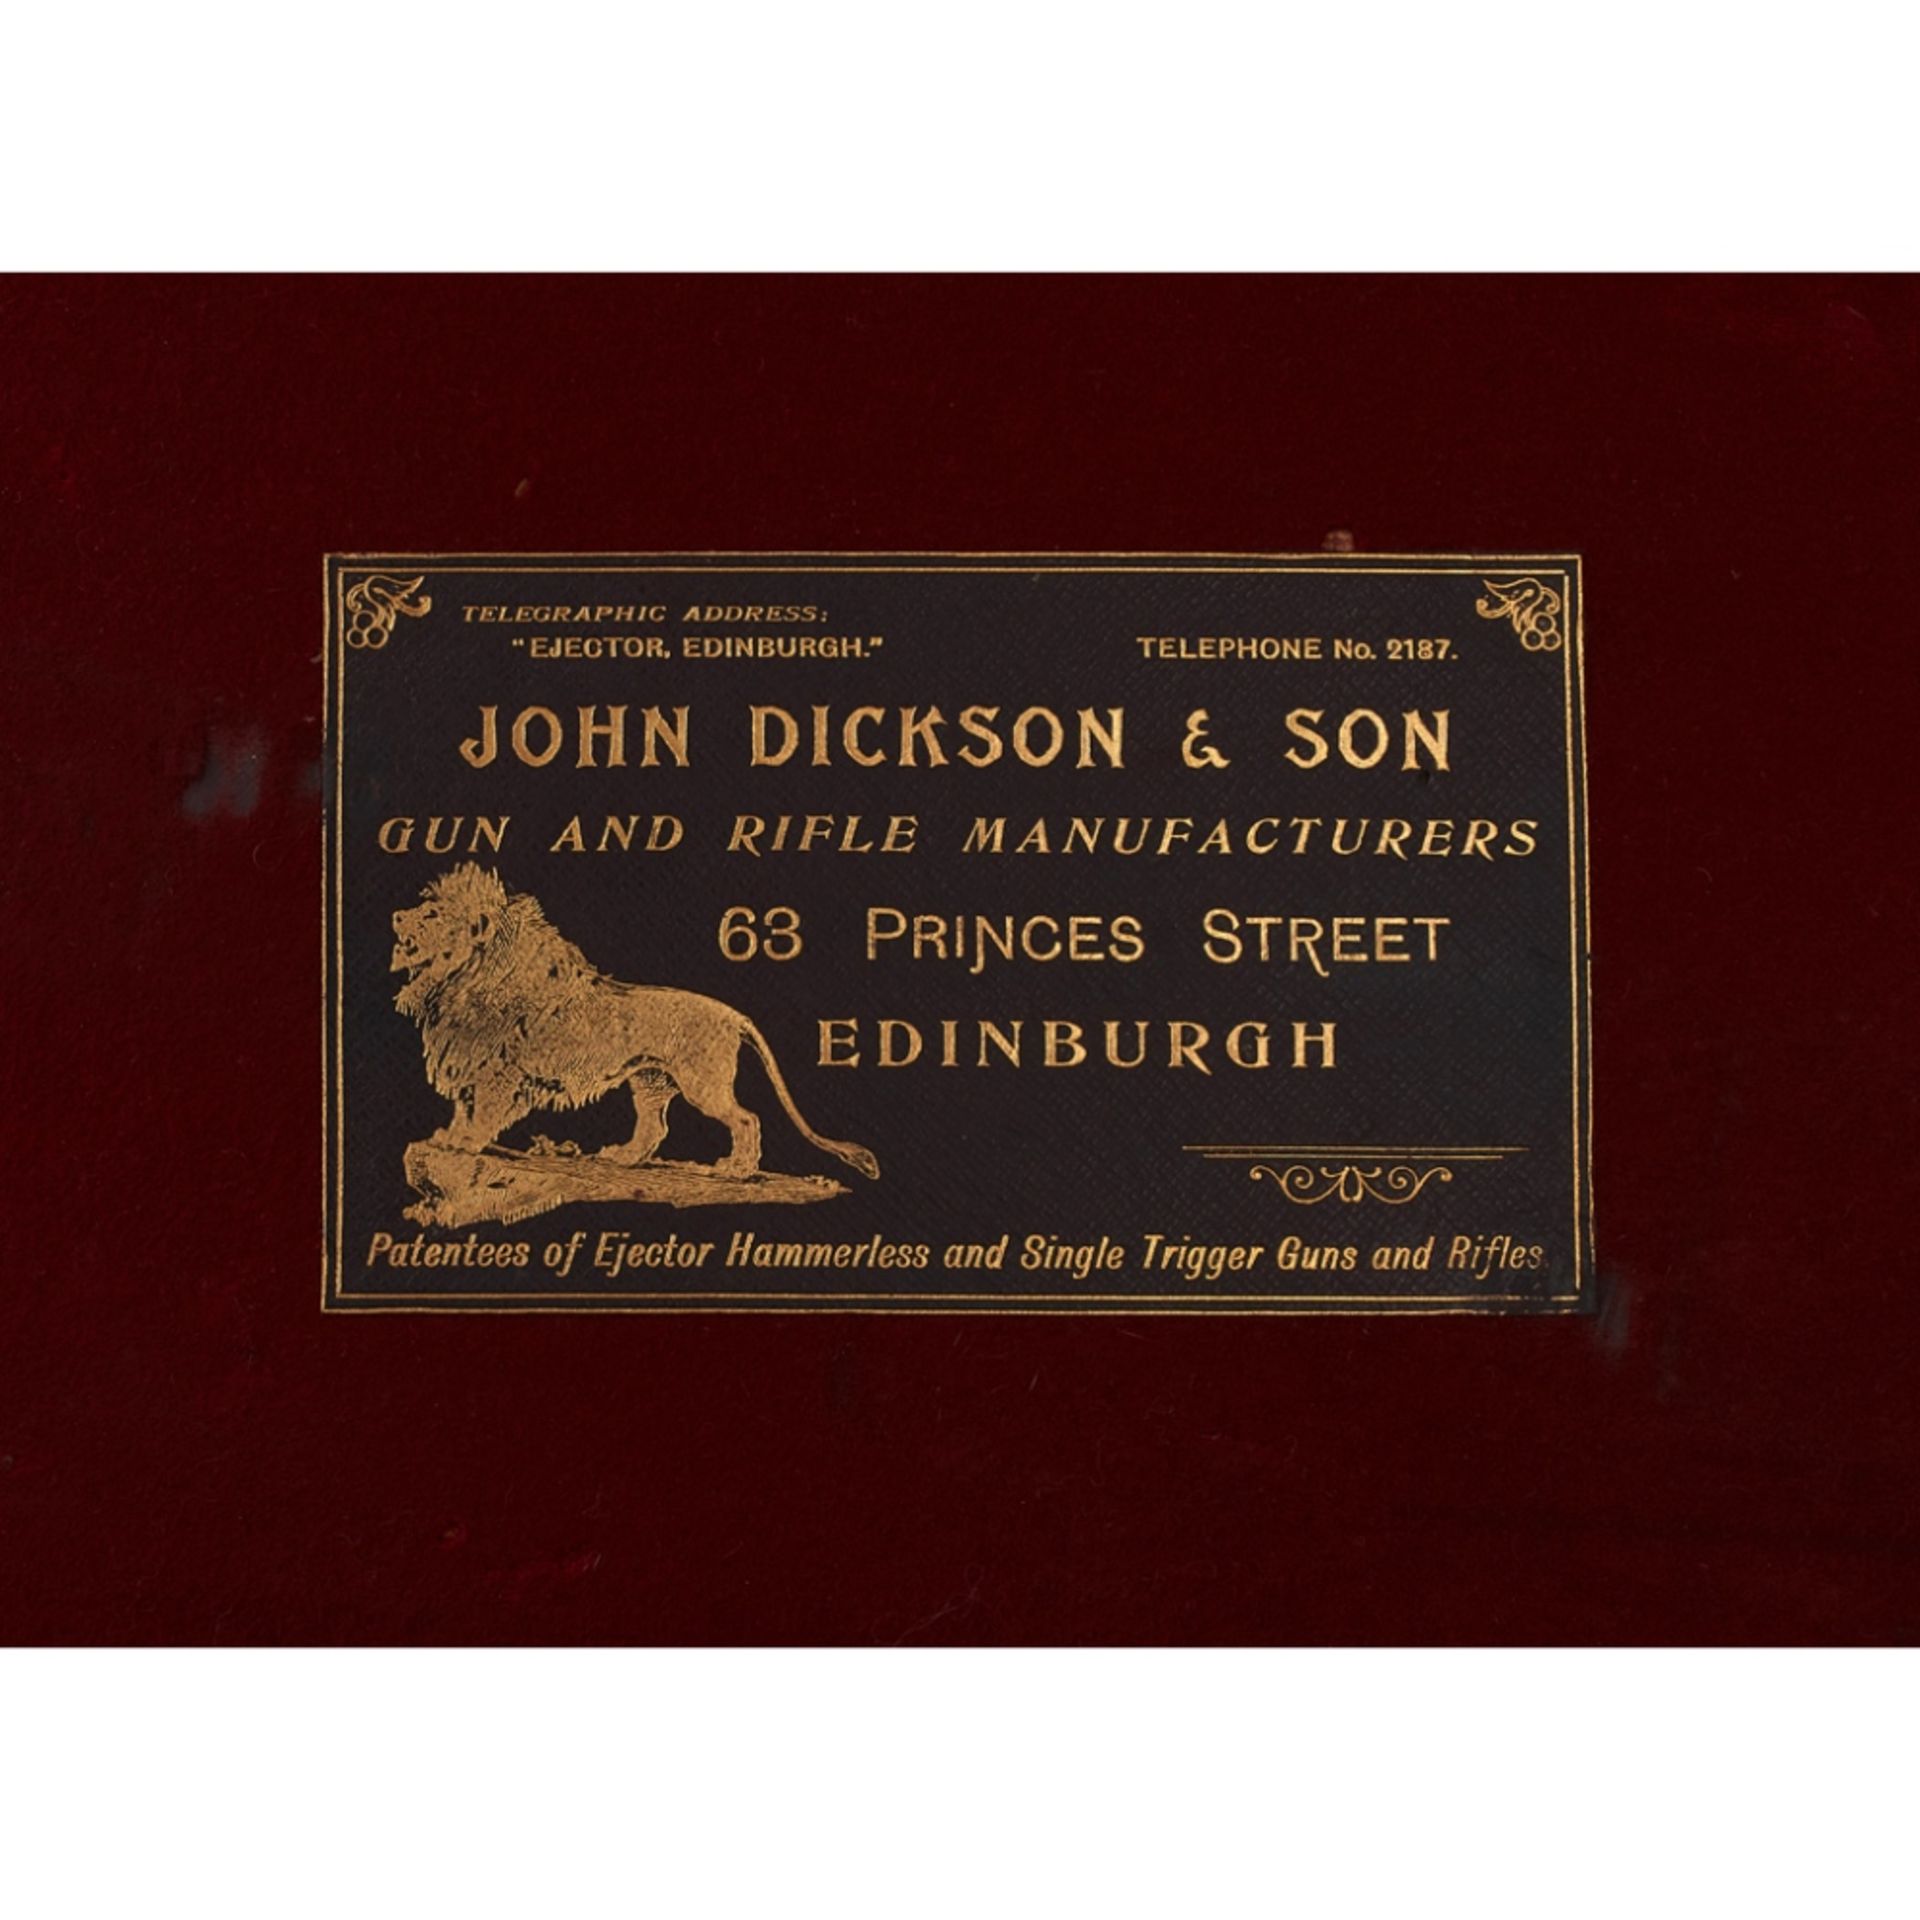 VICTORIAN BRASS MOUNTED LEATHER GUN BOX, JOHN DICKSON & SON, EDINBURGH19TH CENTURY the rectangular - Image 3 of 3